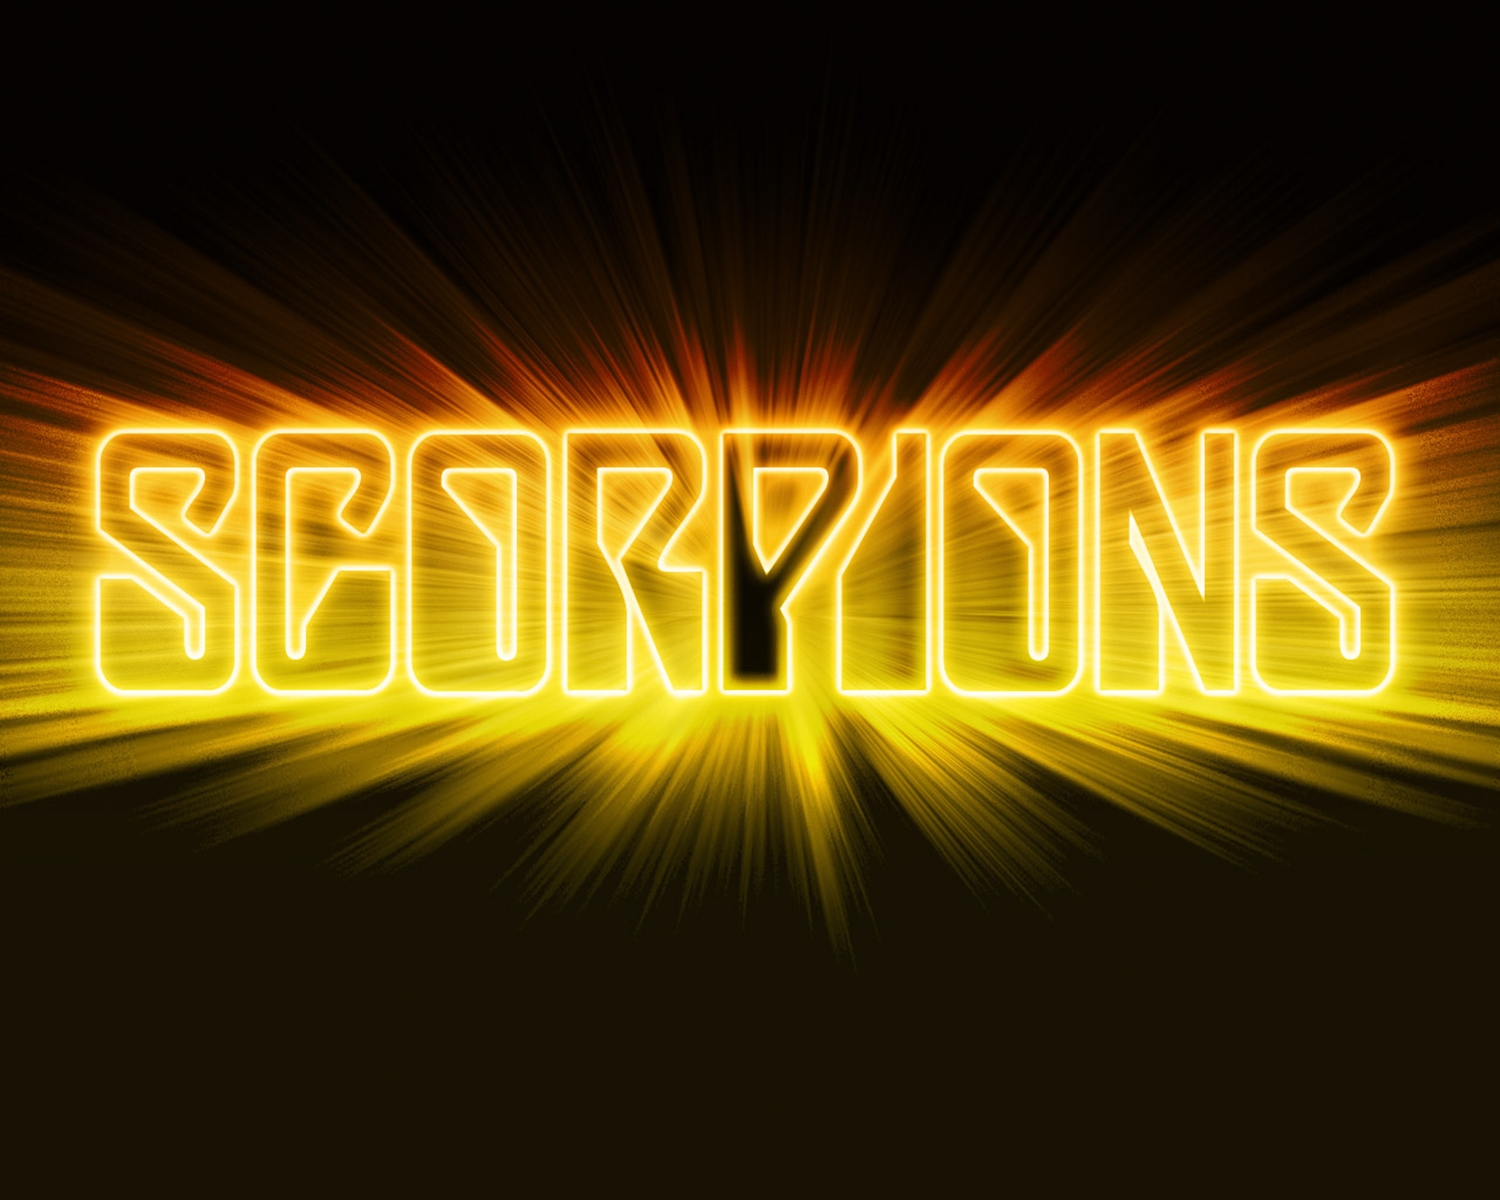 scorpions logo Wallpaper Background | 34461